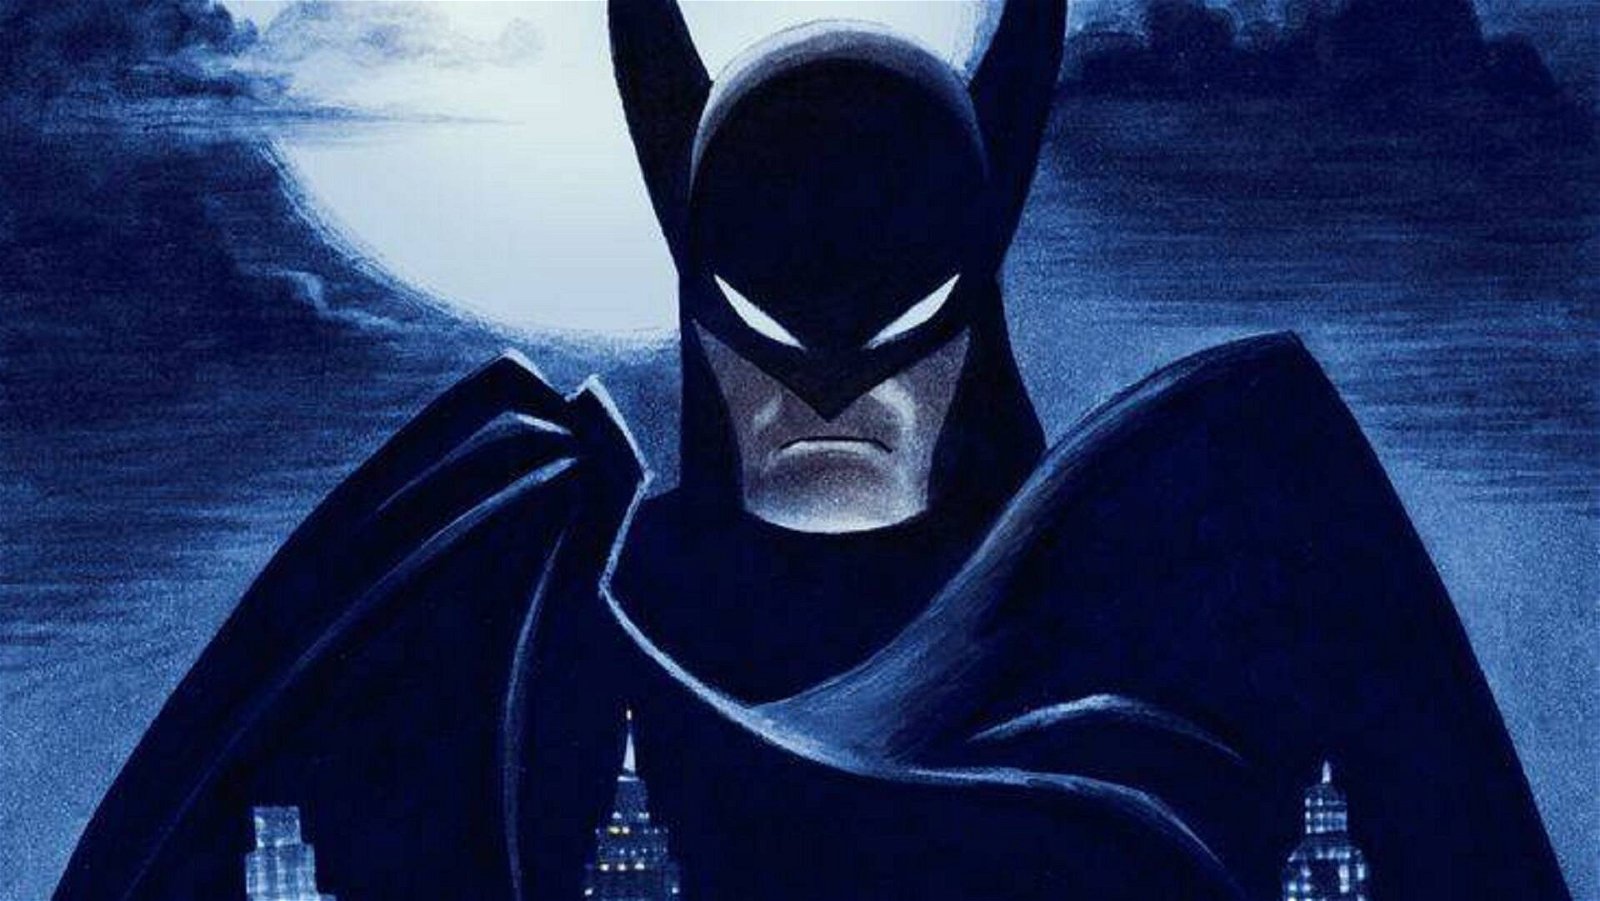 Immagine di Batman: Caped Crusader, Ed Brubaker lavorerà alla serie per HBO Max